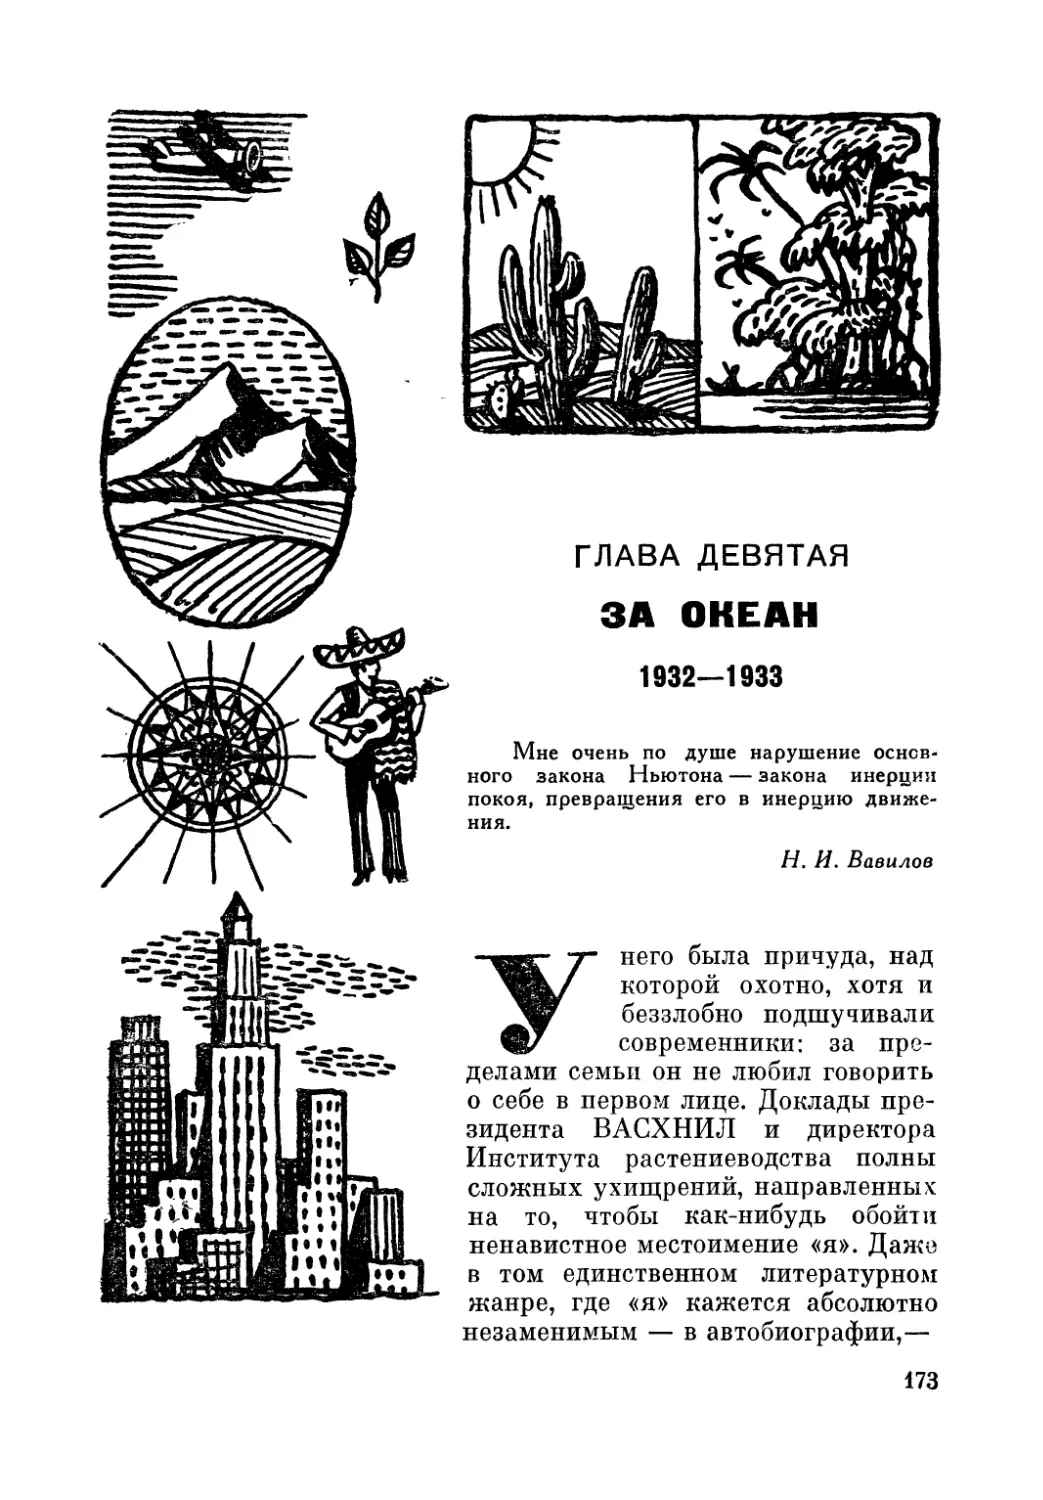 ГЛАВА  ДЕВЯТАЯ.  За  океан.  1932—1933